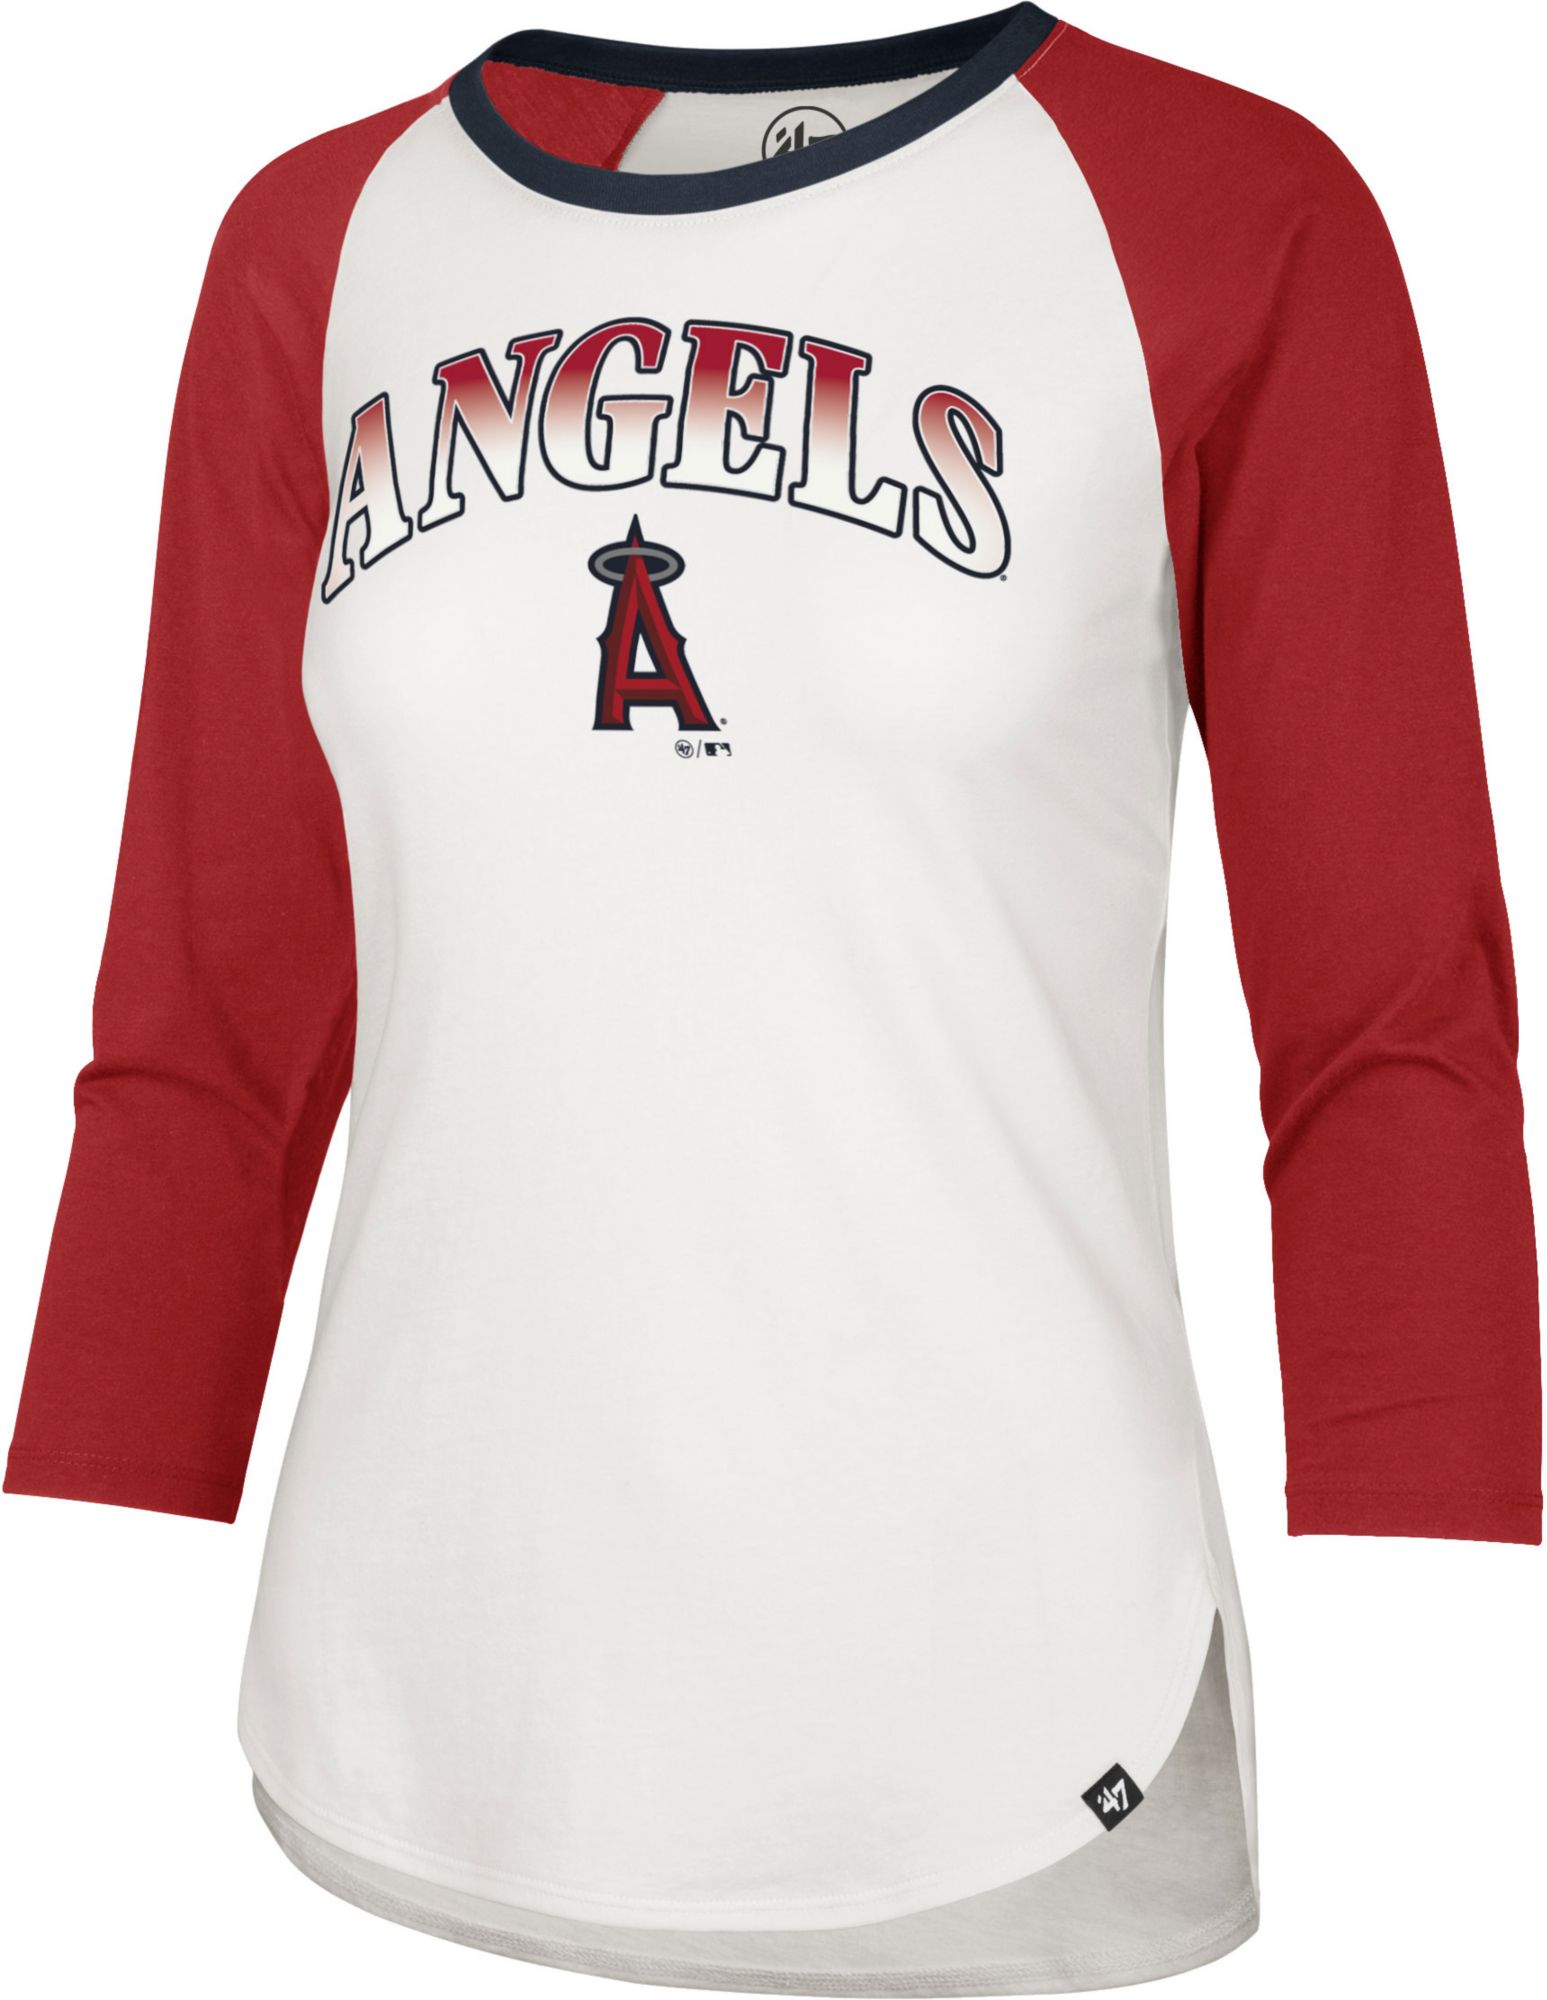 women's angels baseball t shirts